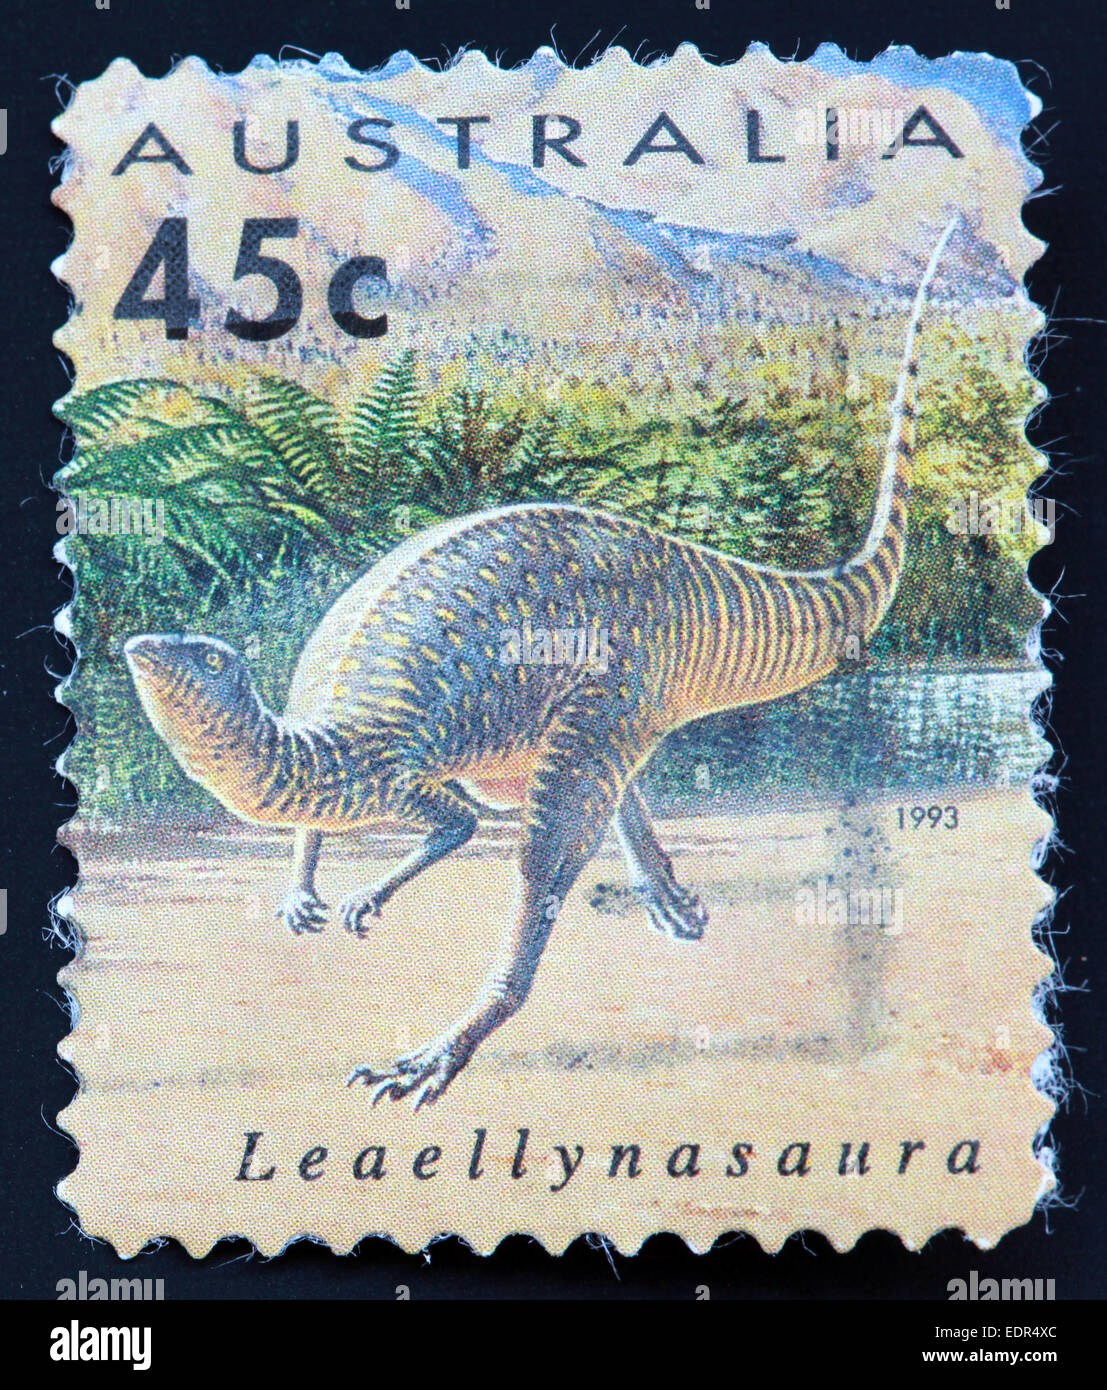 Used and postmarked Australia / Austrailian Stamp 45c Leaellynasaura 1993 Stock Photo